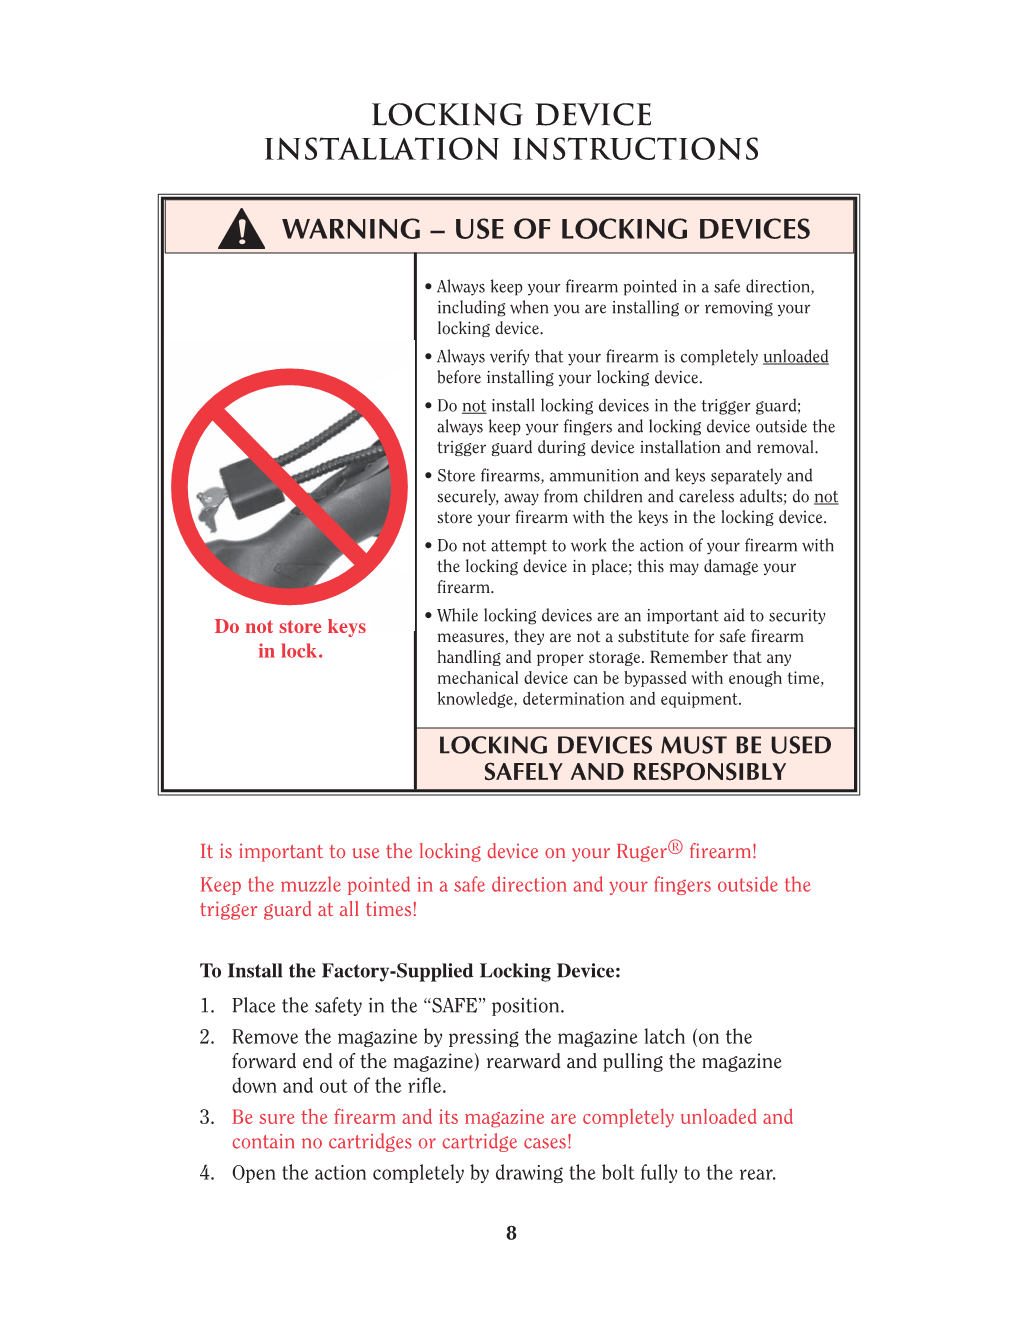 Locking Device Installation Instructions Warning